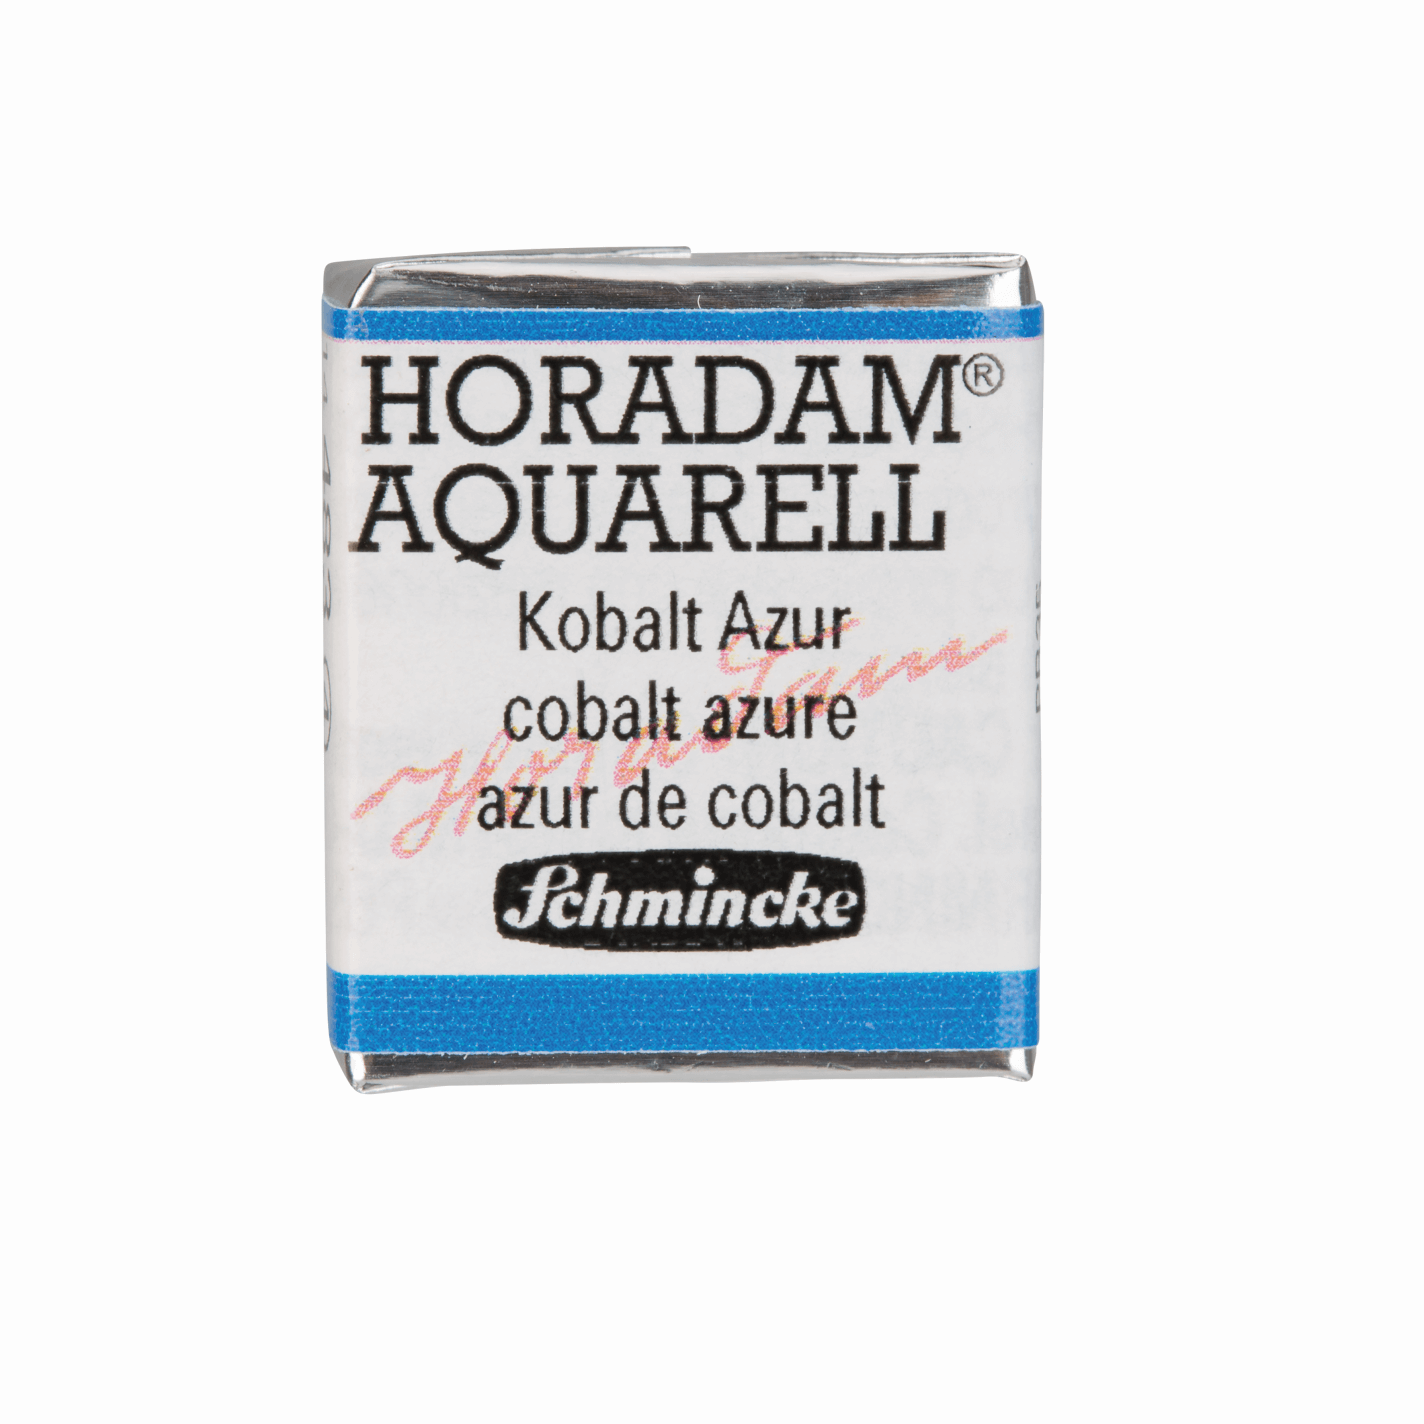 Schmincke Horadam Aquarell pans 1/2 pan Cobalt Azure